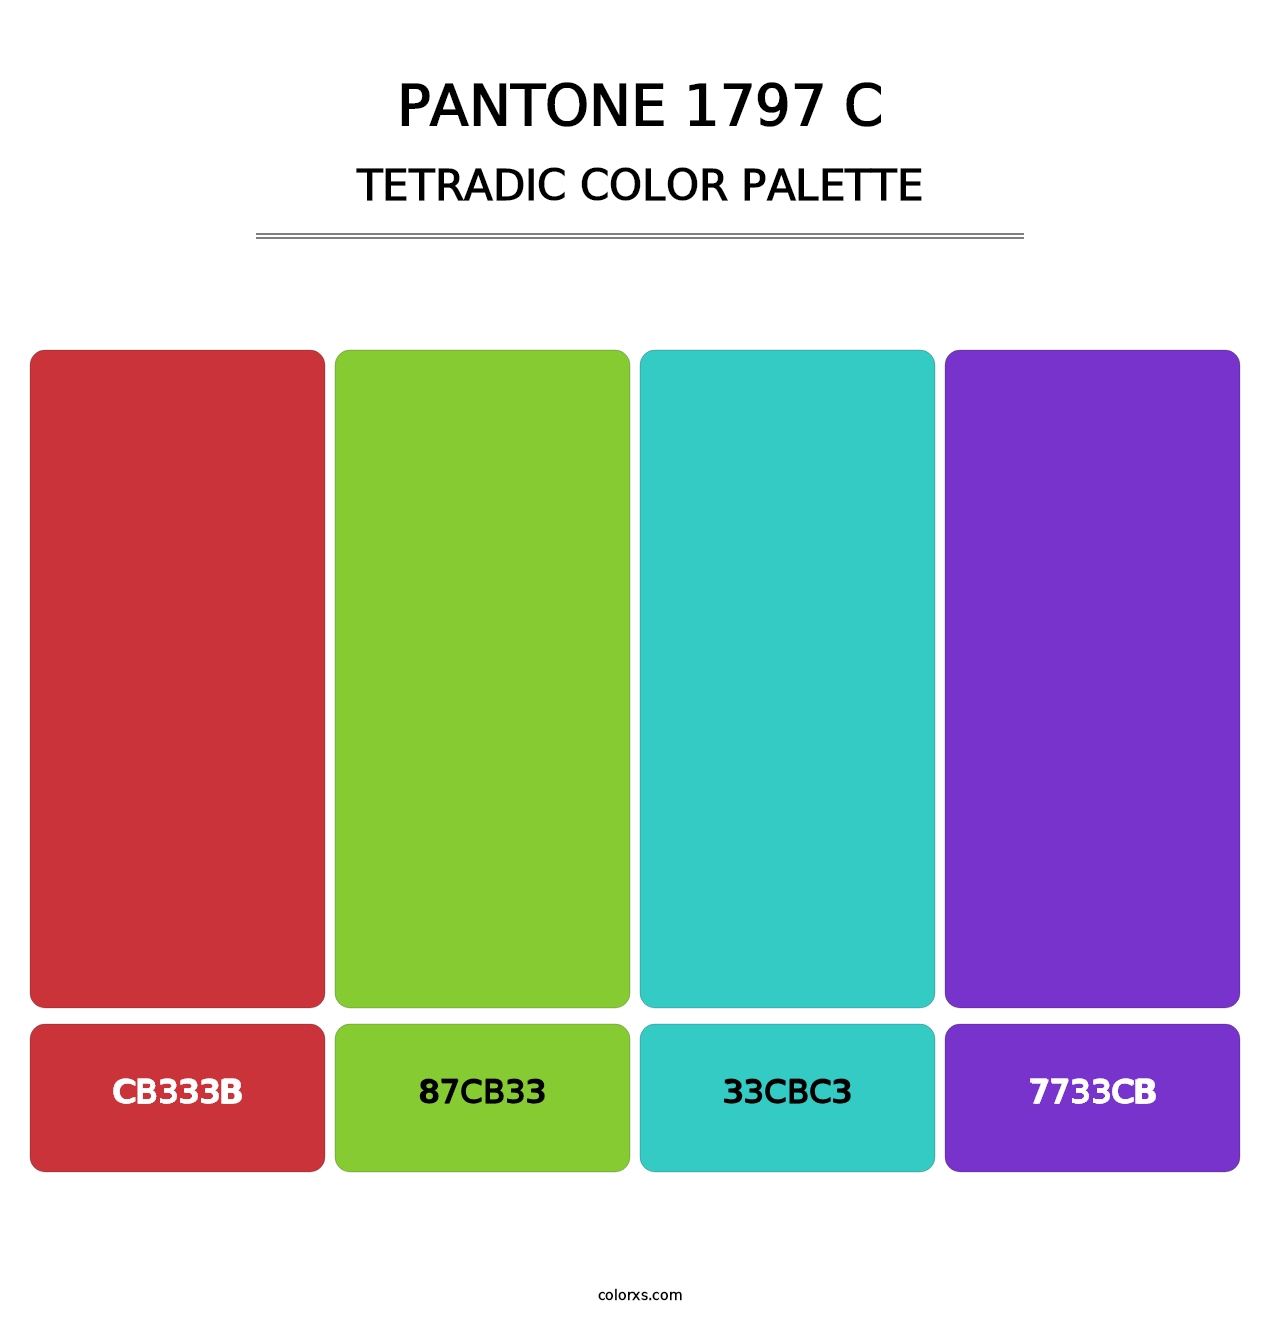 PANTONE 1797 C - Tetradic Color Palette